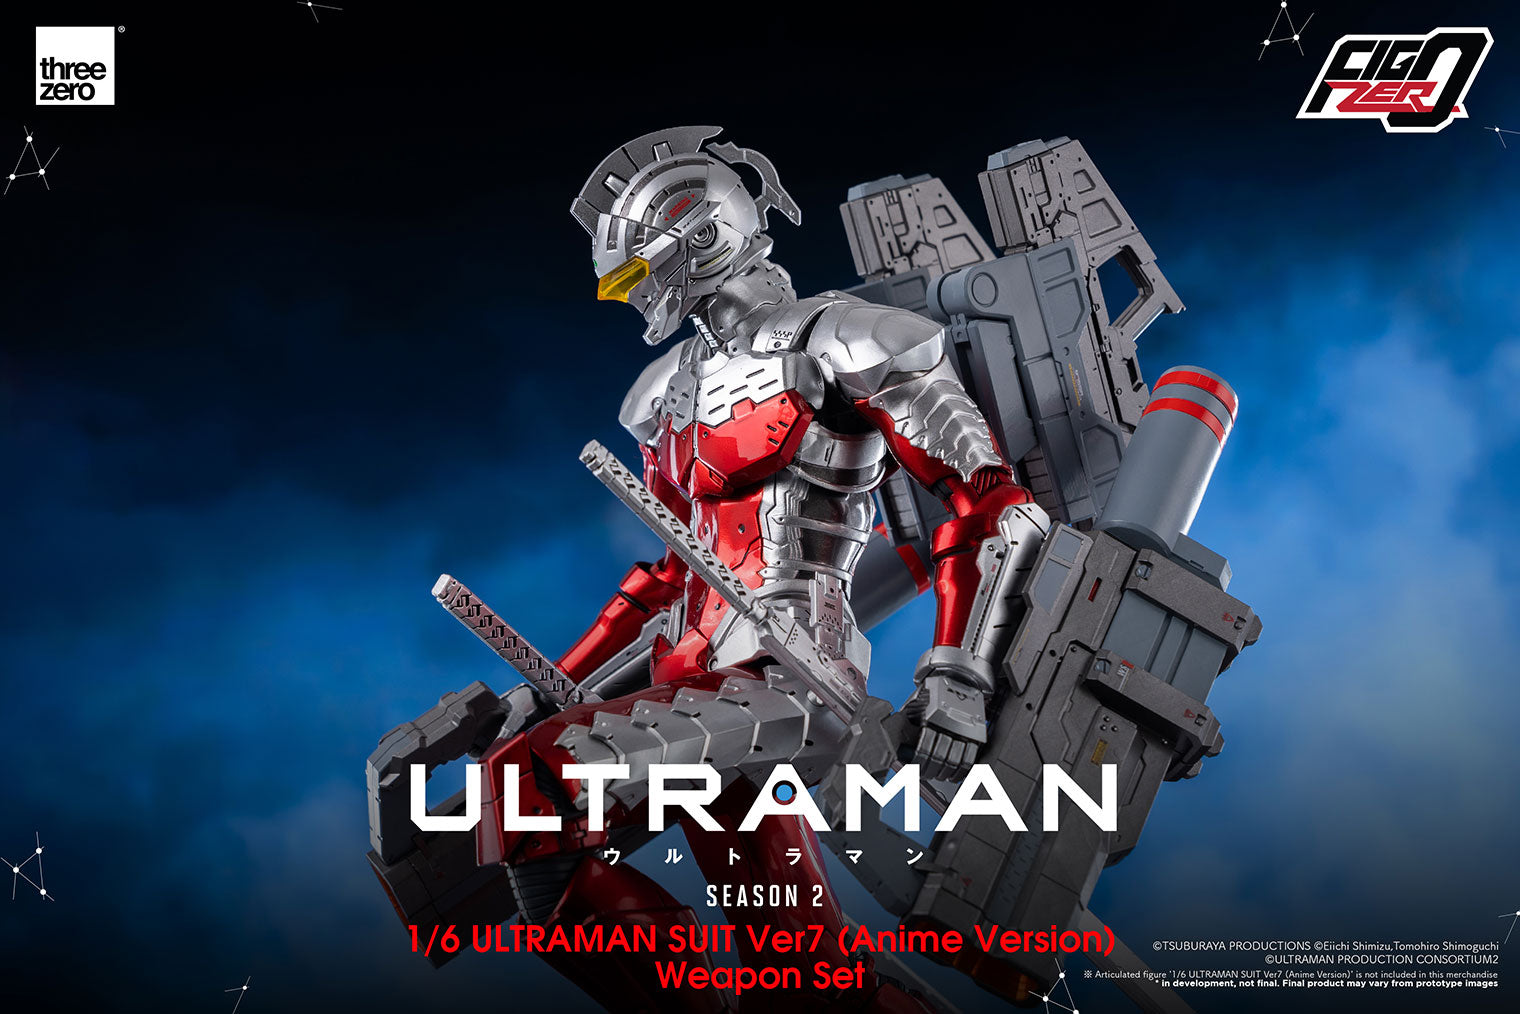 threezero - FigZero - Netflix&#39;s Ultraman - Ultraman Suit Ver7 Weapon Set (Season 2) (1/6 Scale) - Marvelous Toys